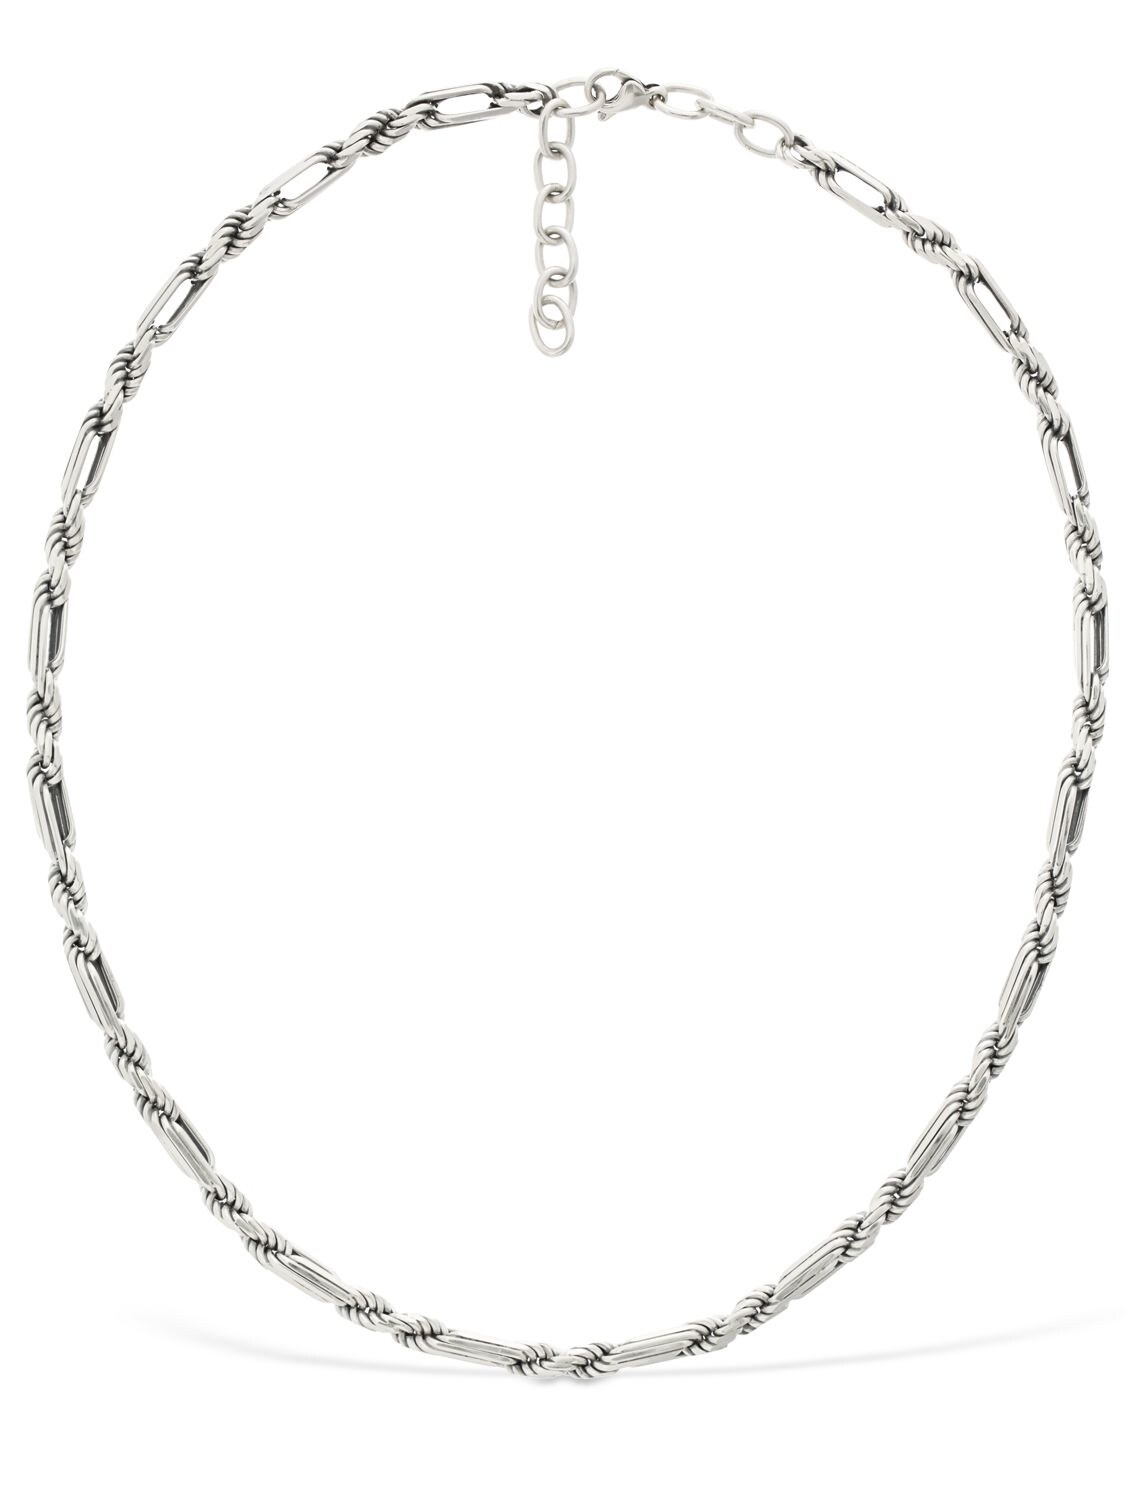 Bottega Veneta Chain Necklace in Silver Metallic Mens Jewellery Necklaces for Men 